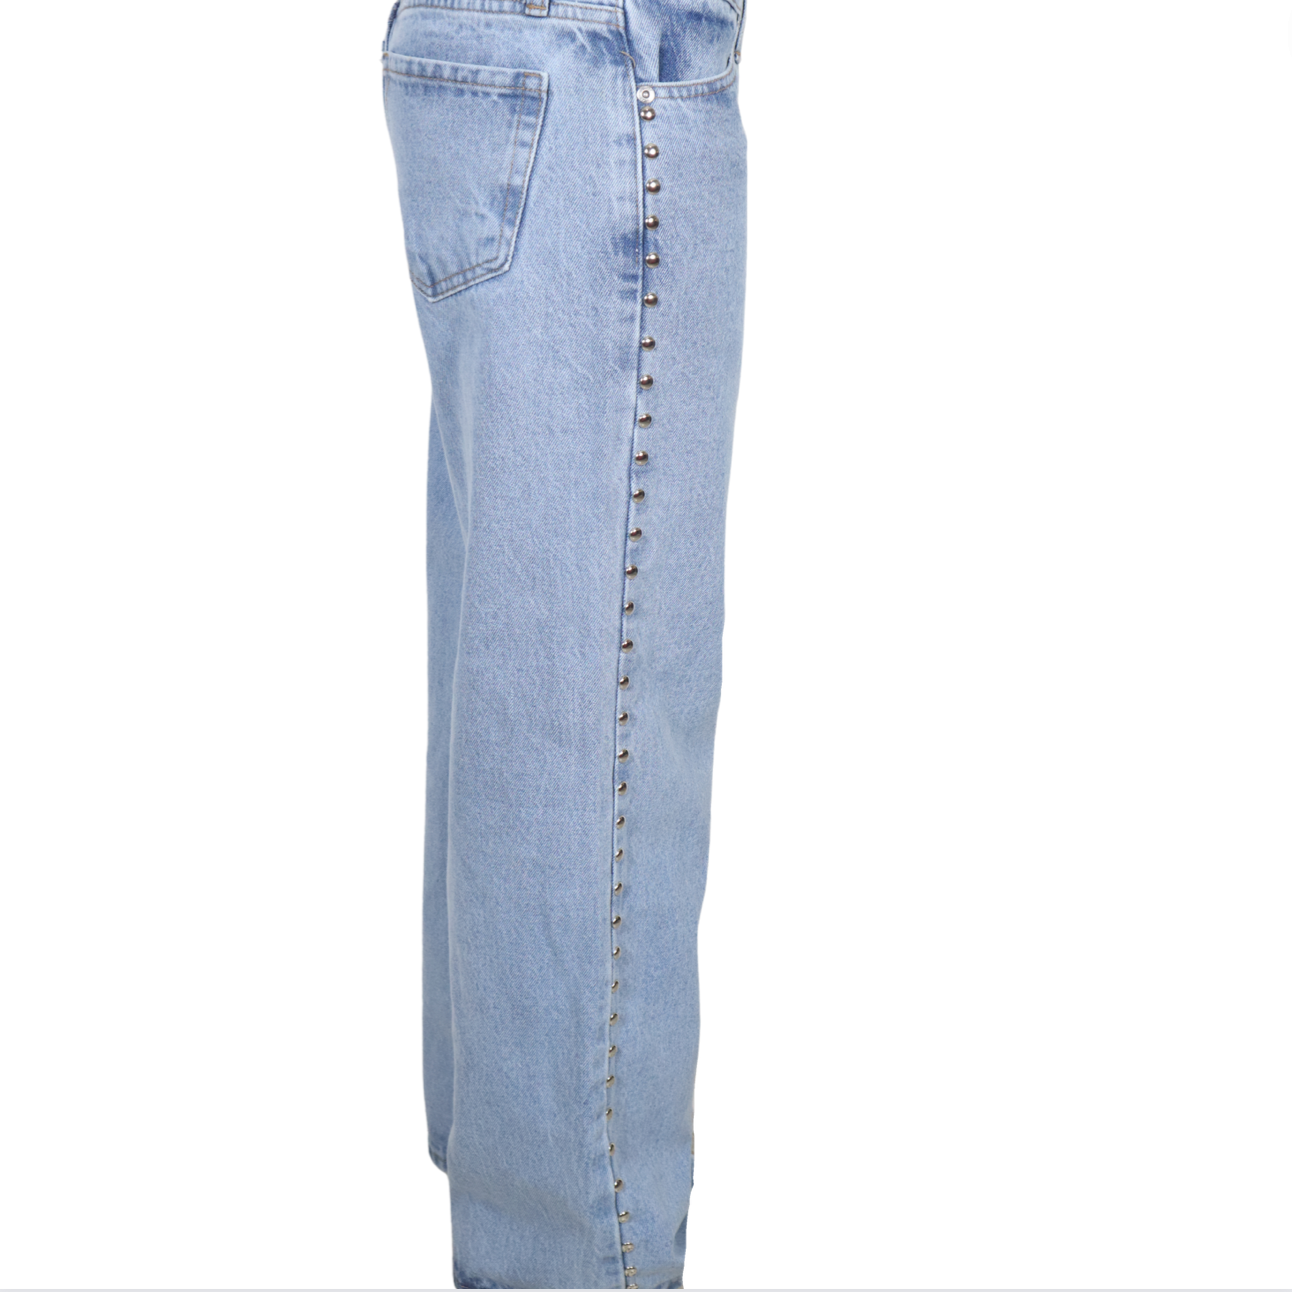 Basic jeans (no star)